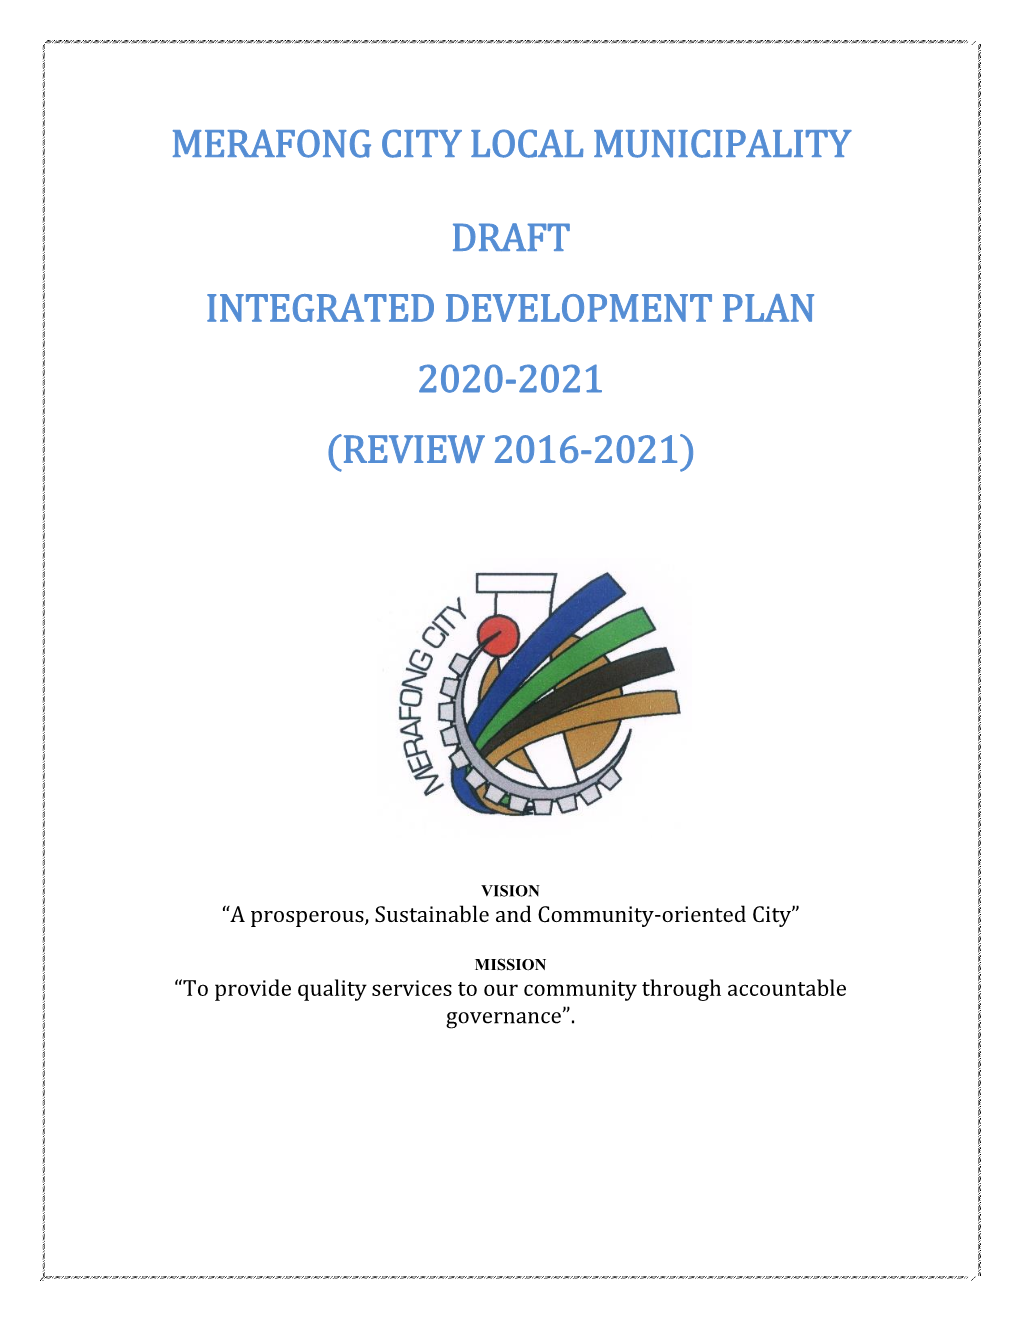 Merafong City Local Municipality Draft Integrated Development Plan 2020